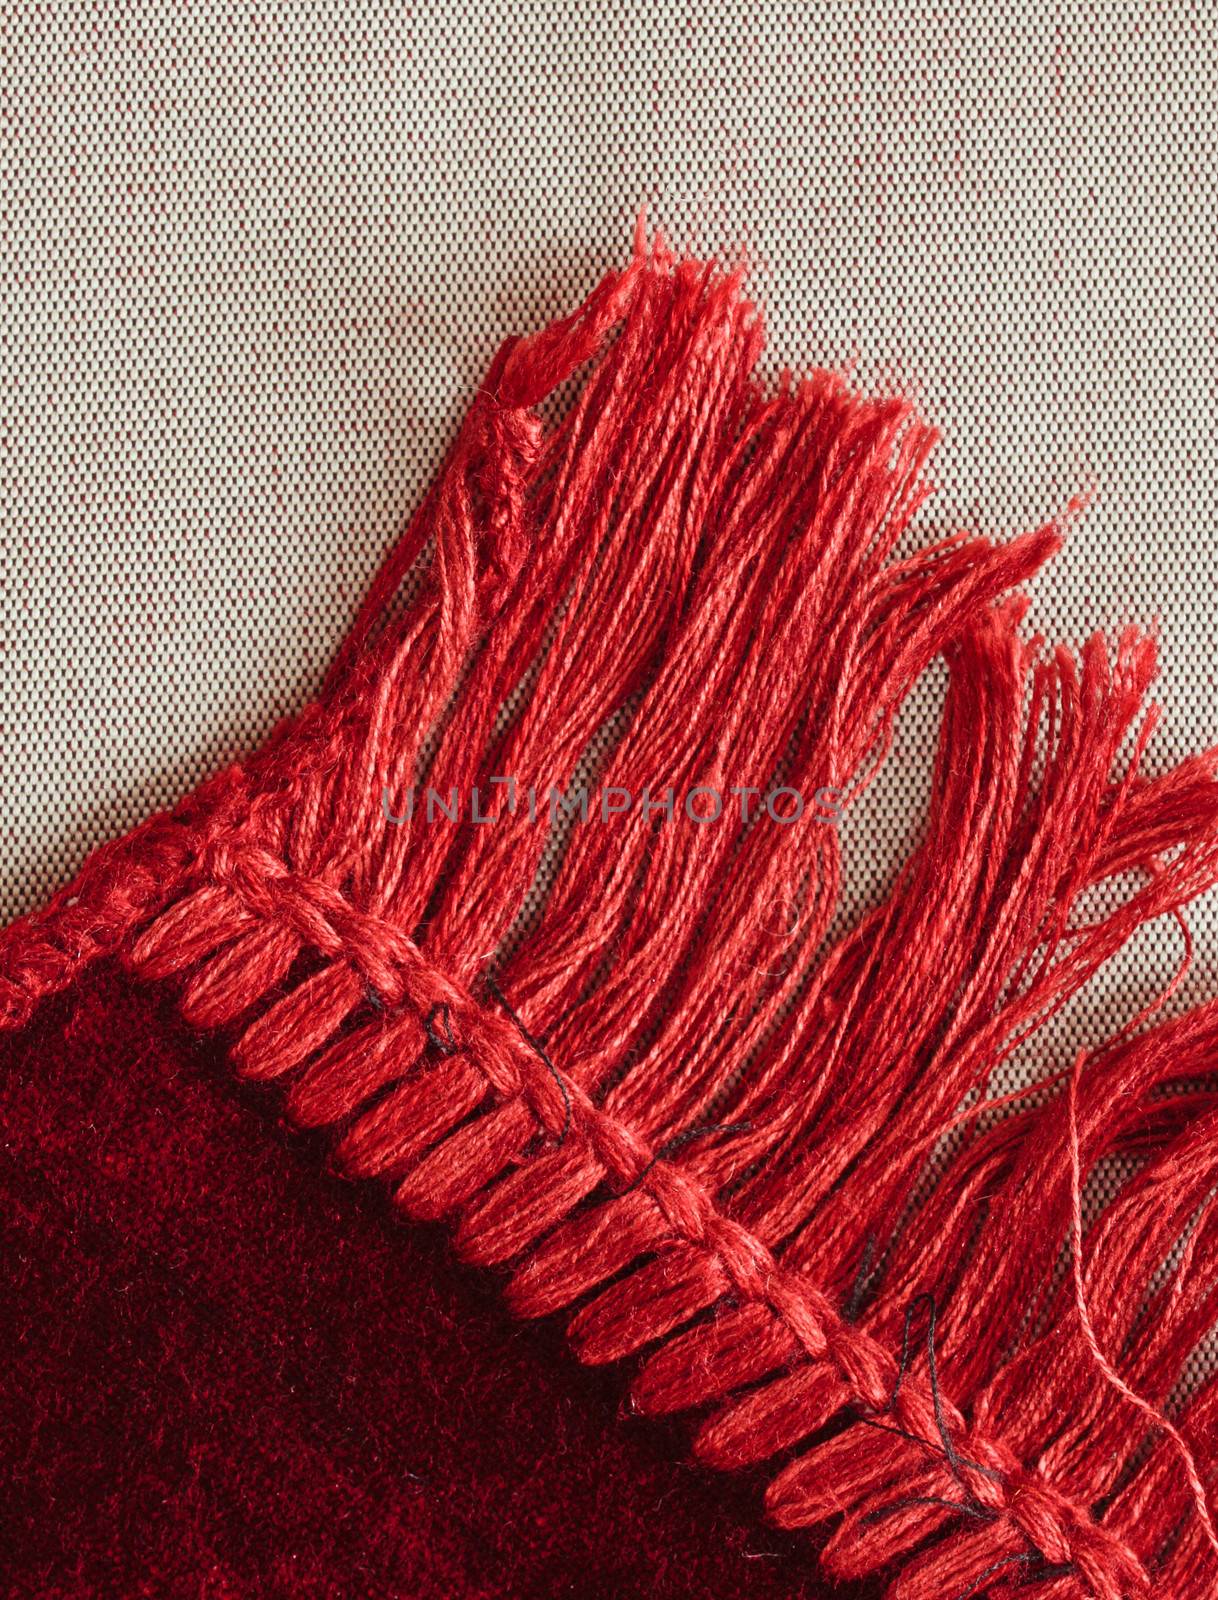 Red rug by trgowanlock